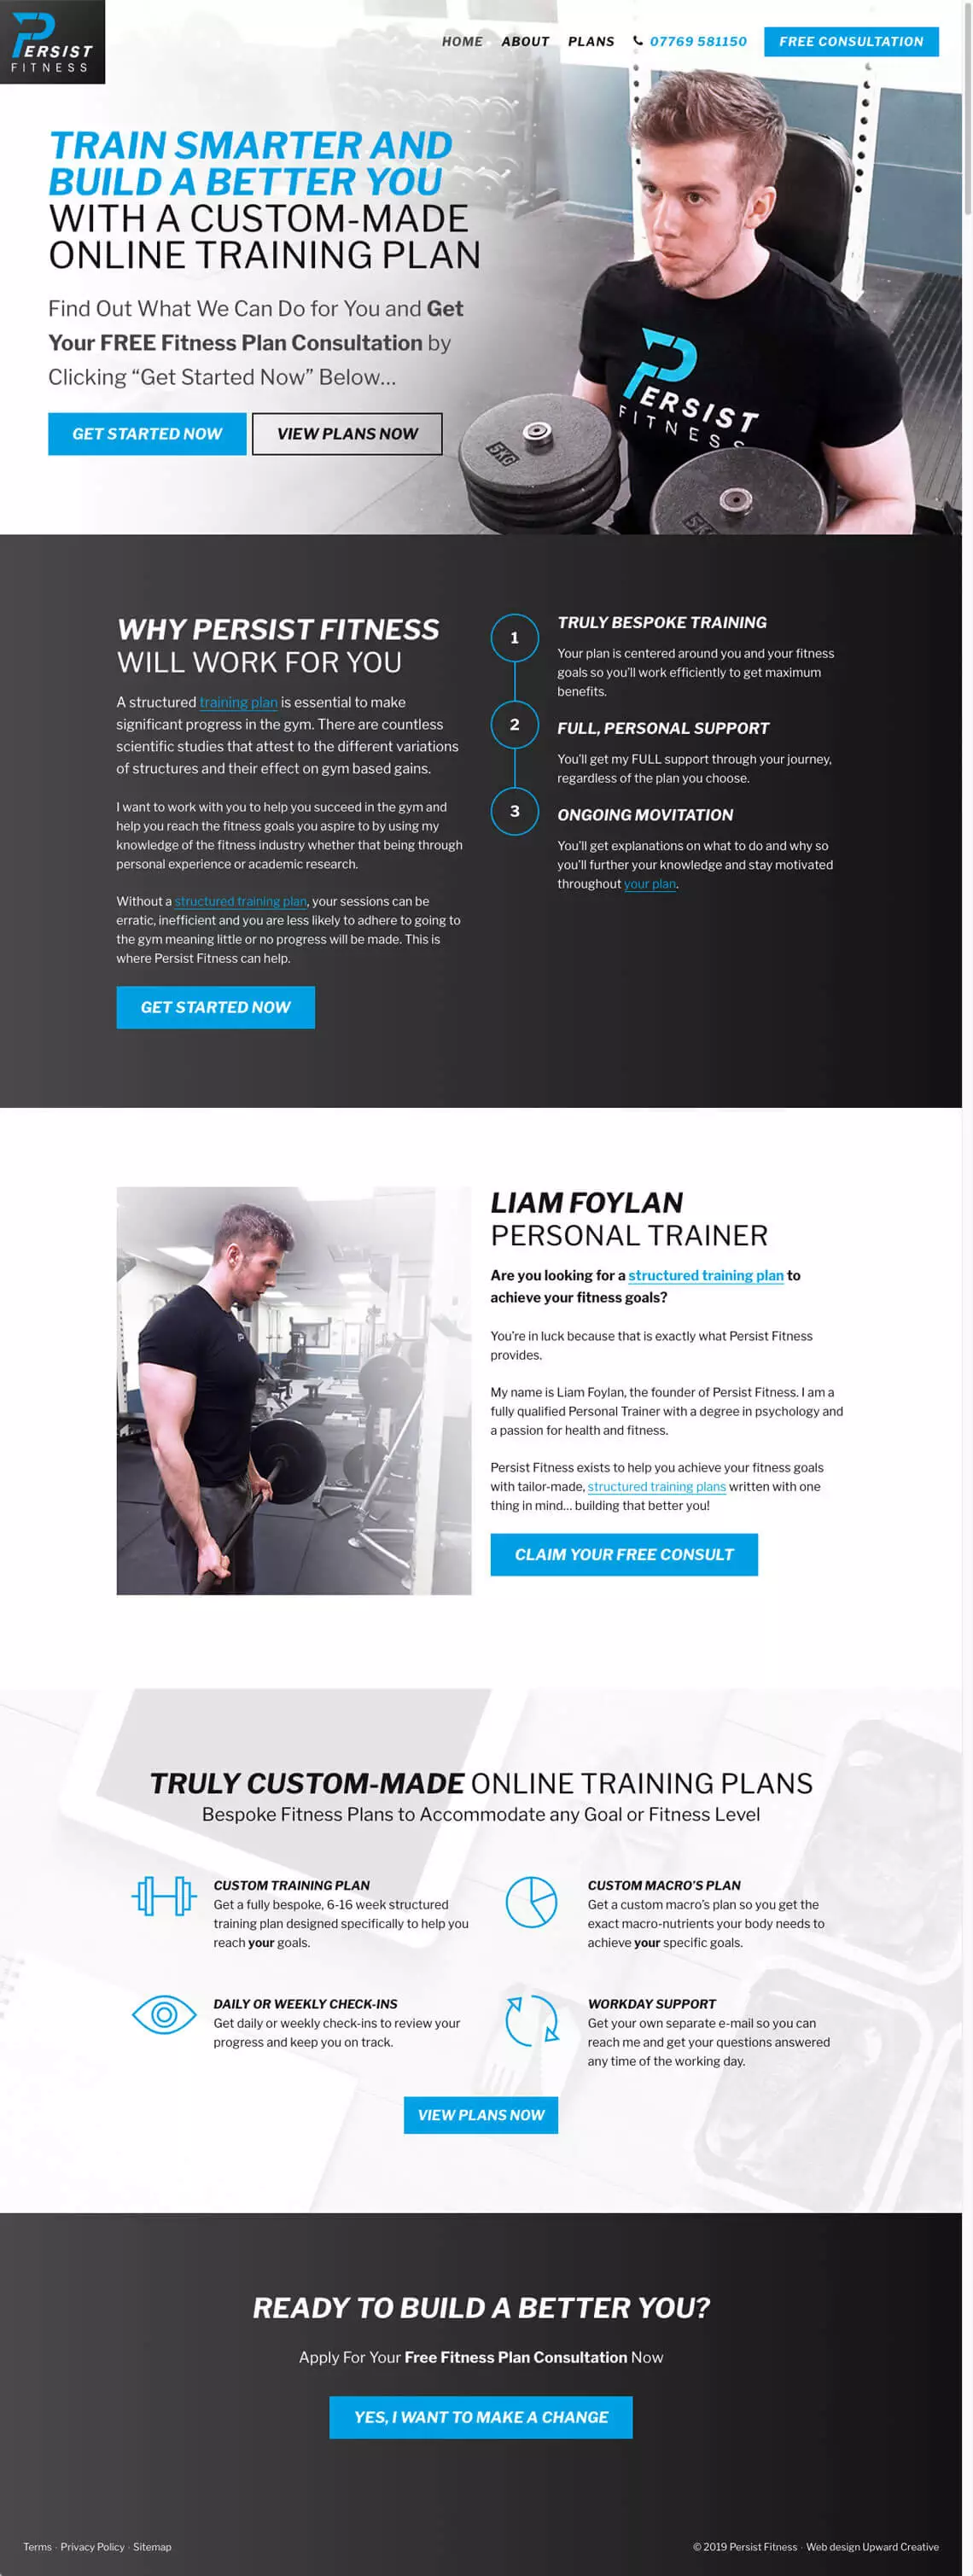 Persist Fitness website homepage design